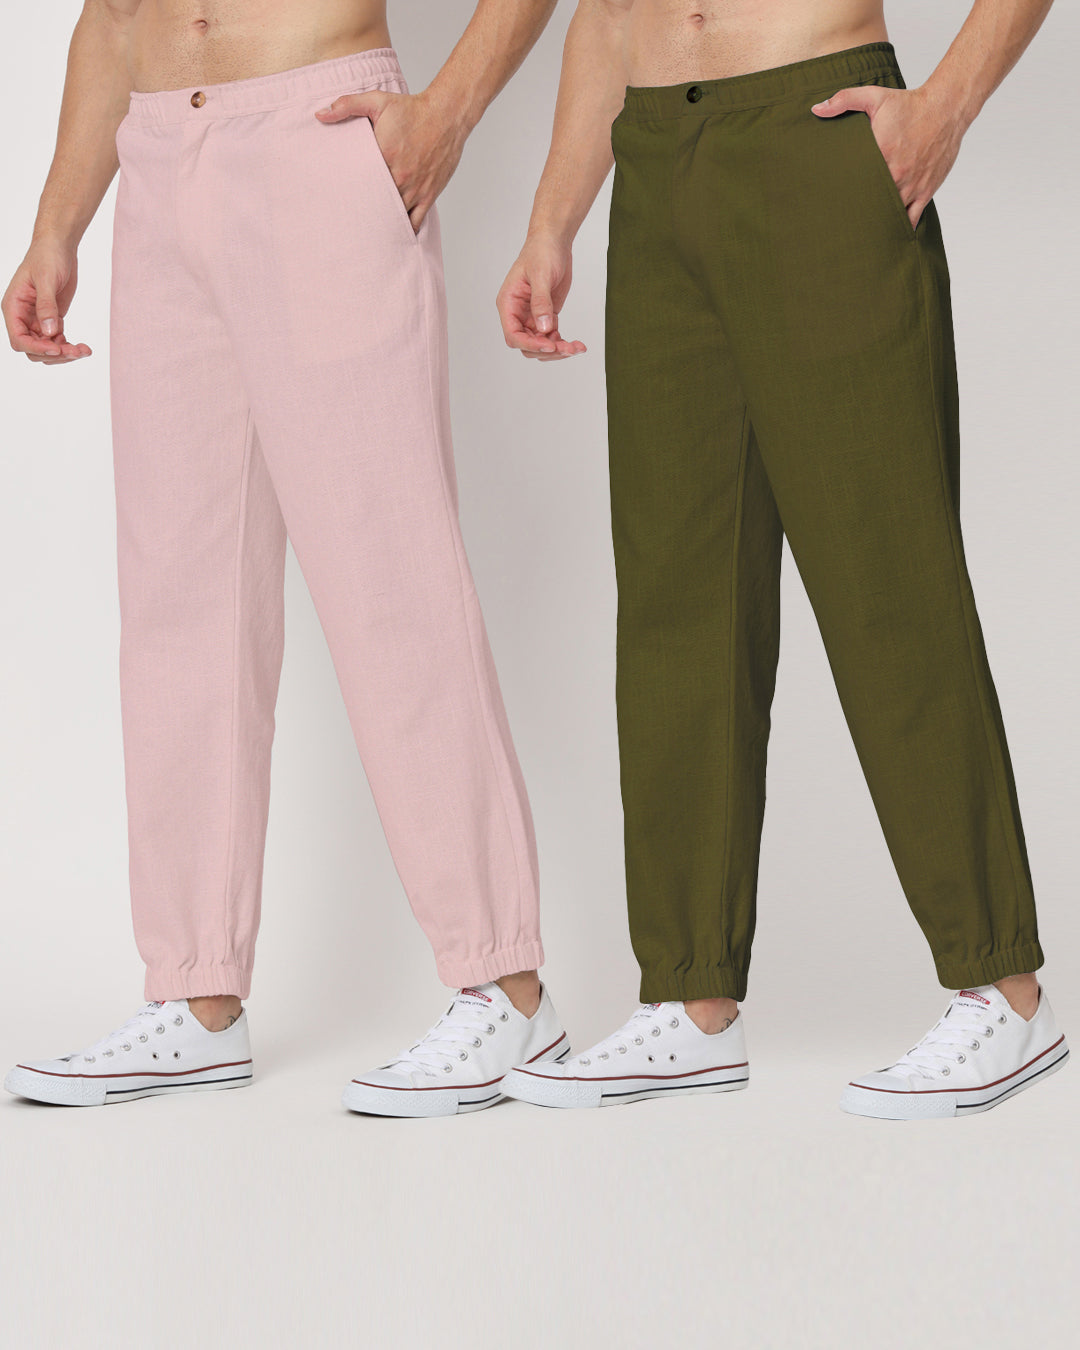 Combo: Olive Green & Fondant Pink Jog Men's Pants - Set of 2